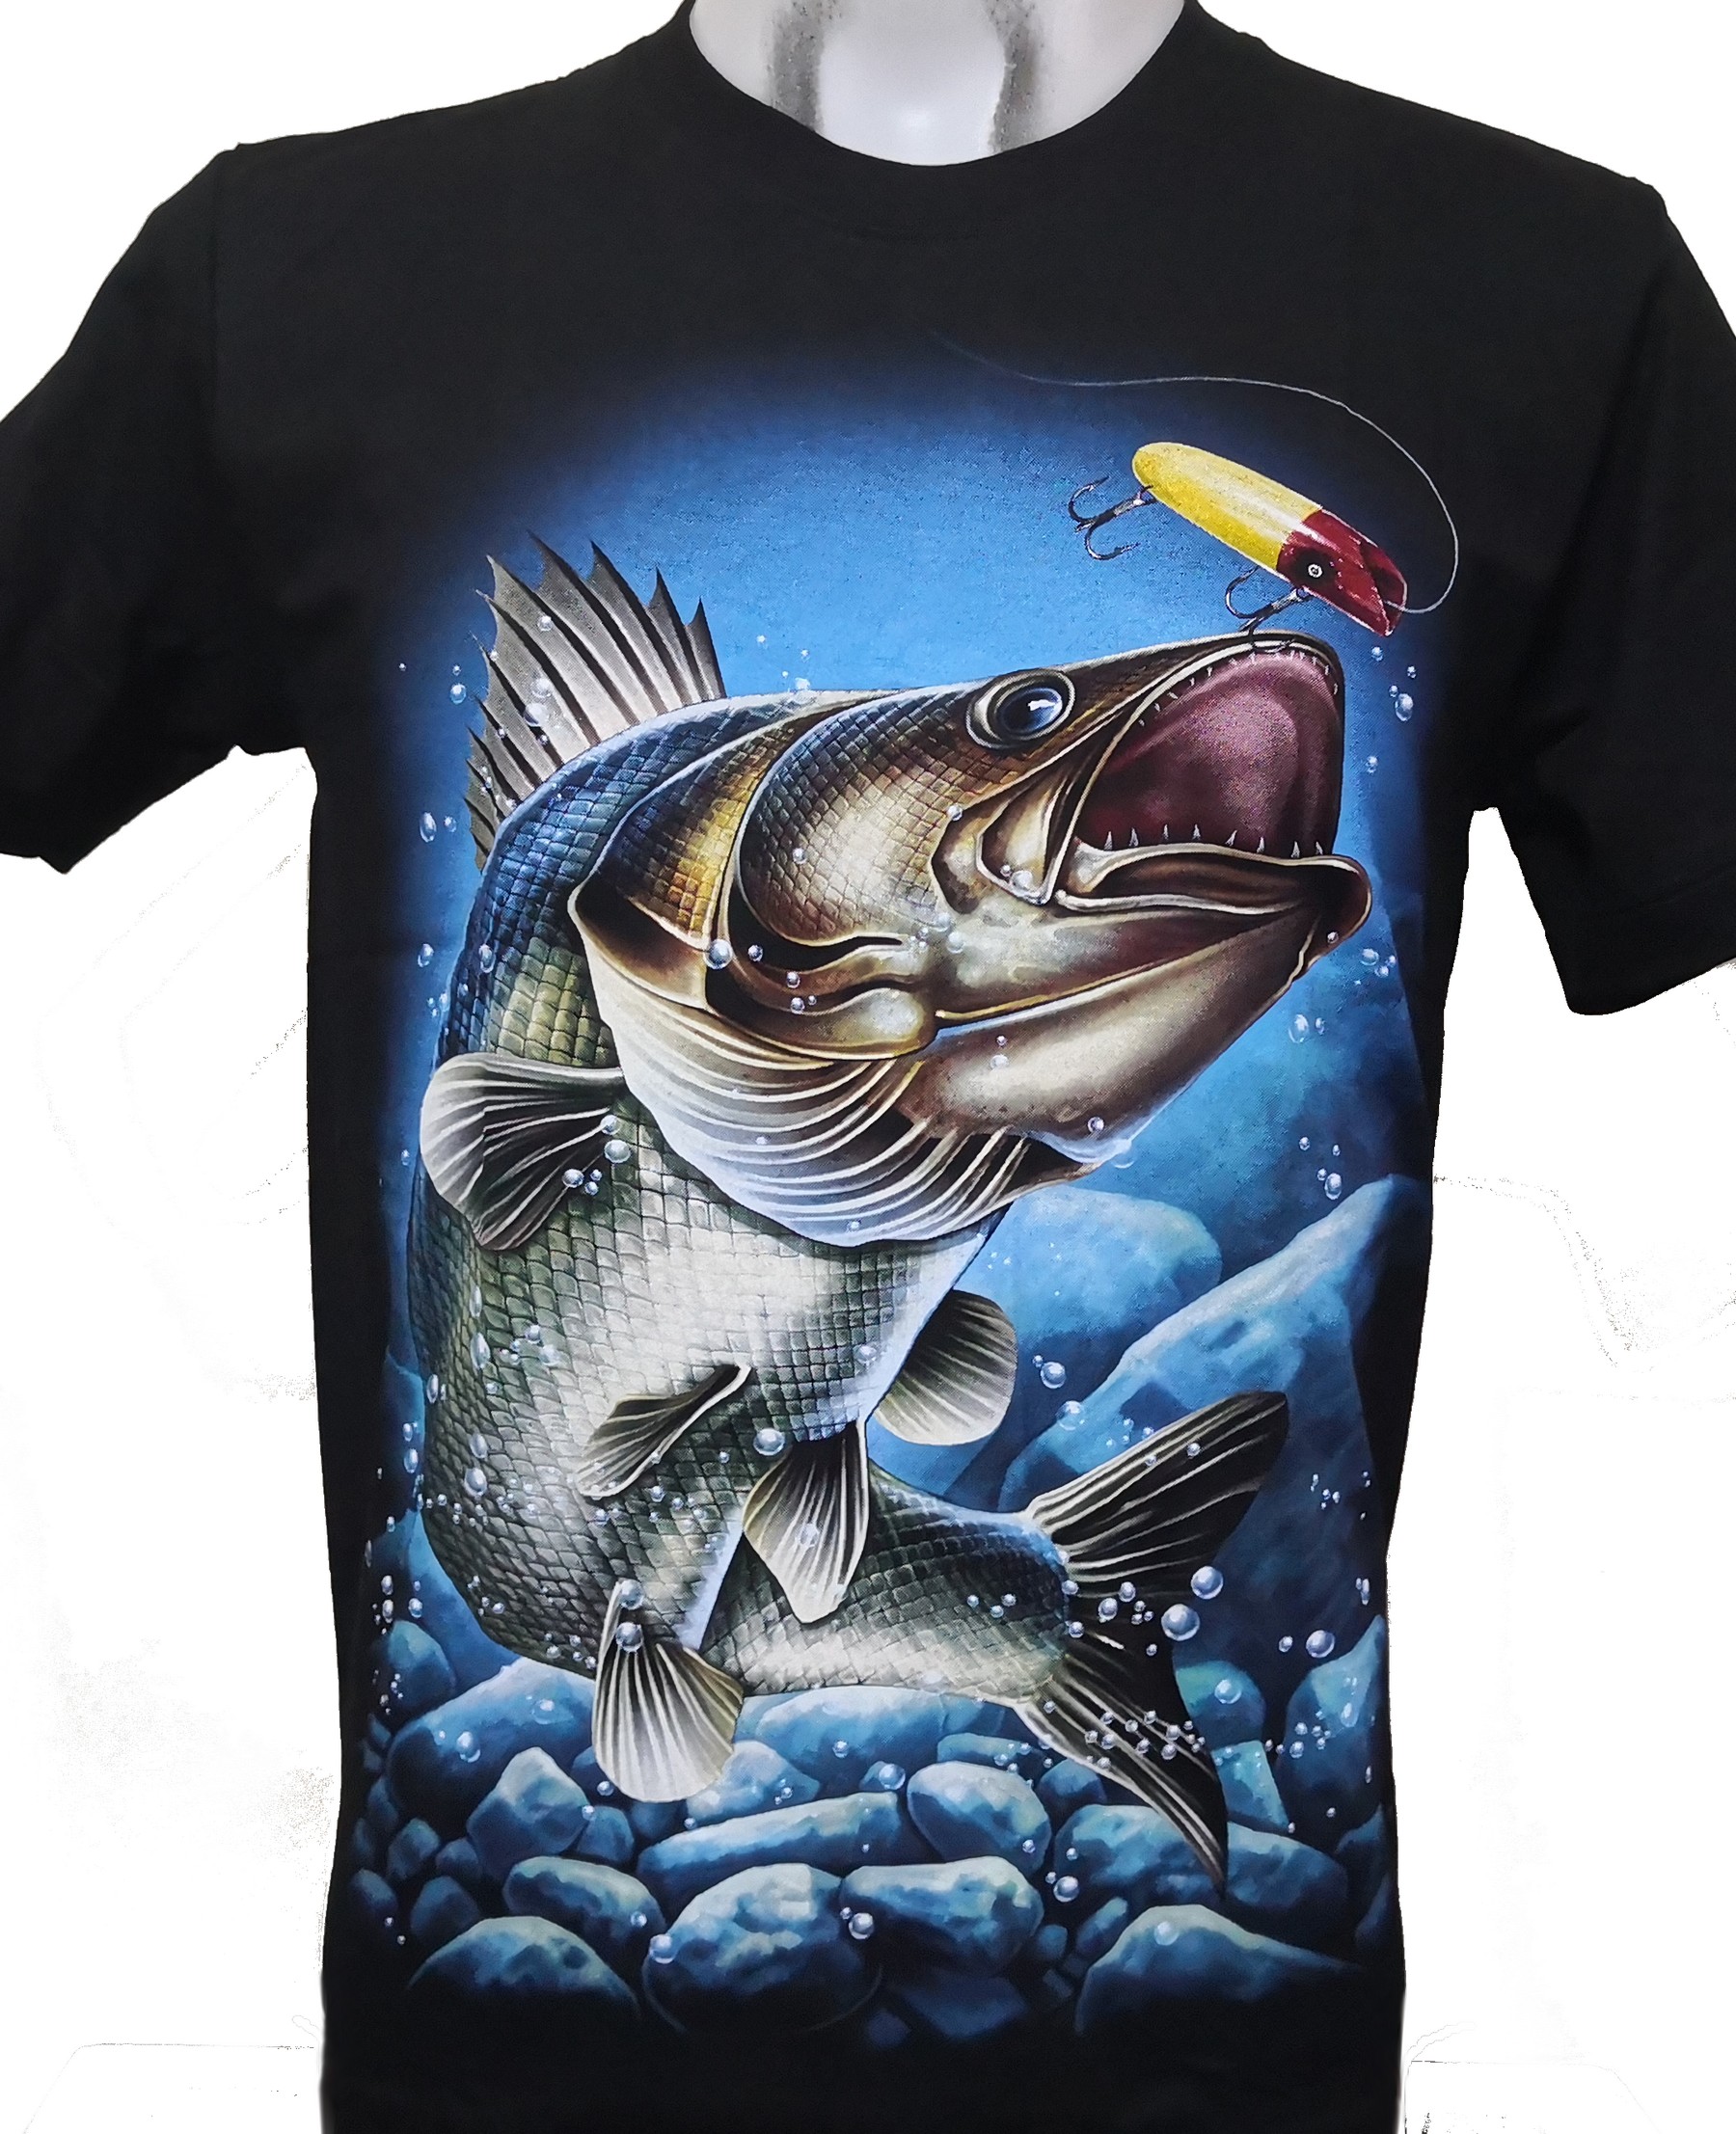 Fish t-shirt size XL